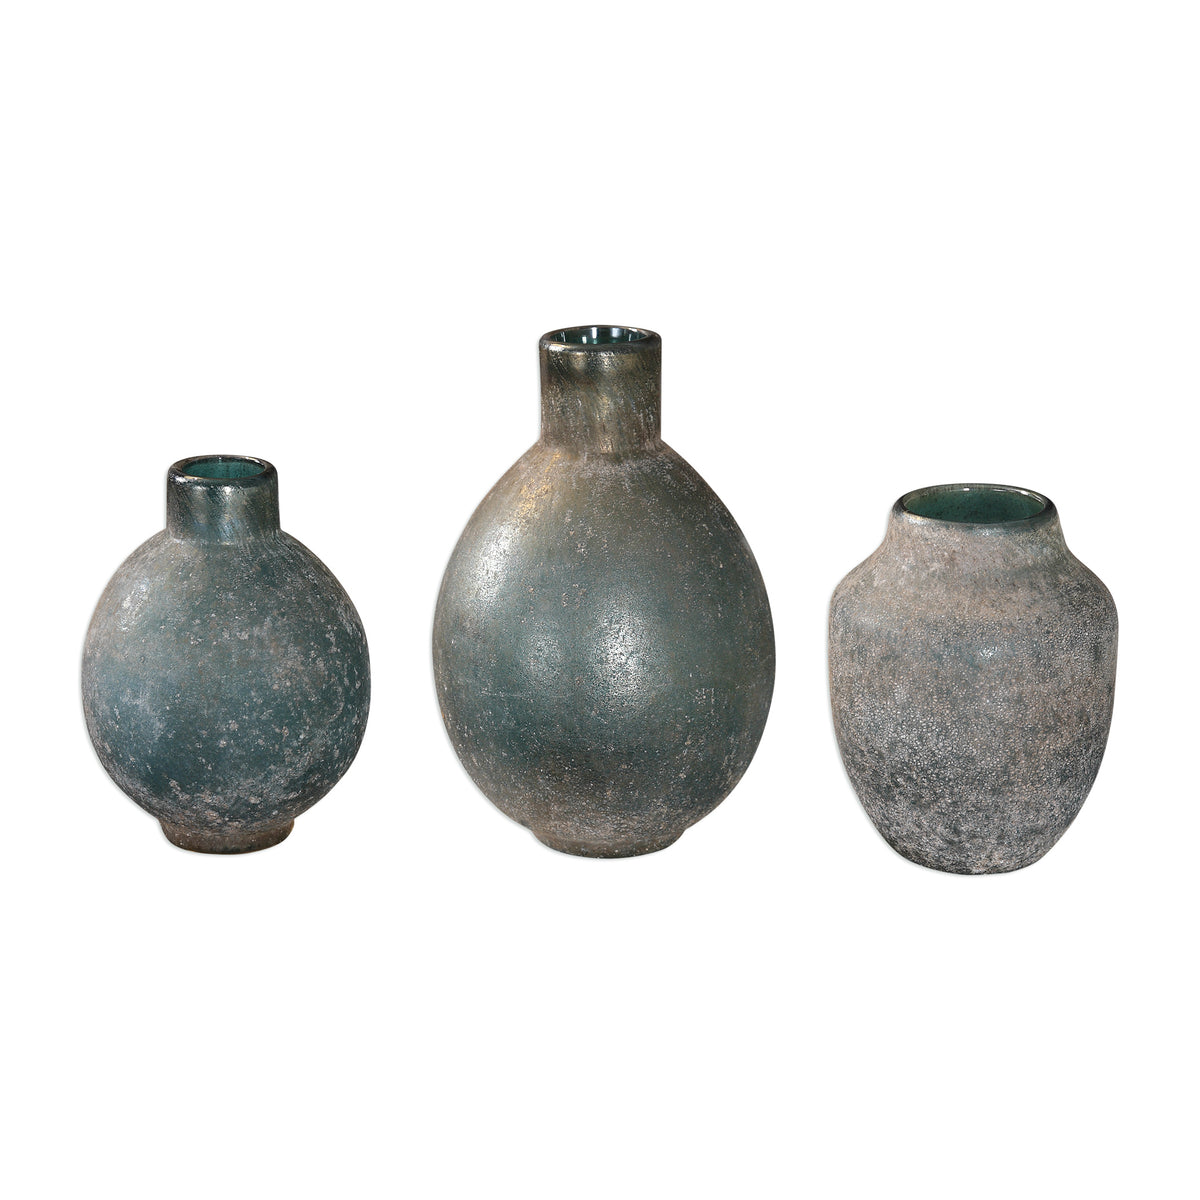 Mercede Weathered Blue-Green Vases S/3